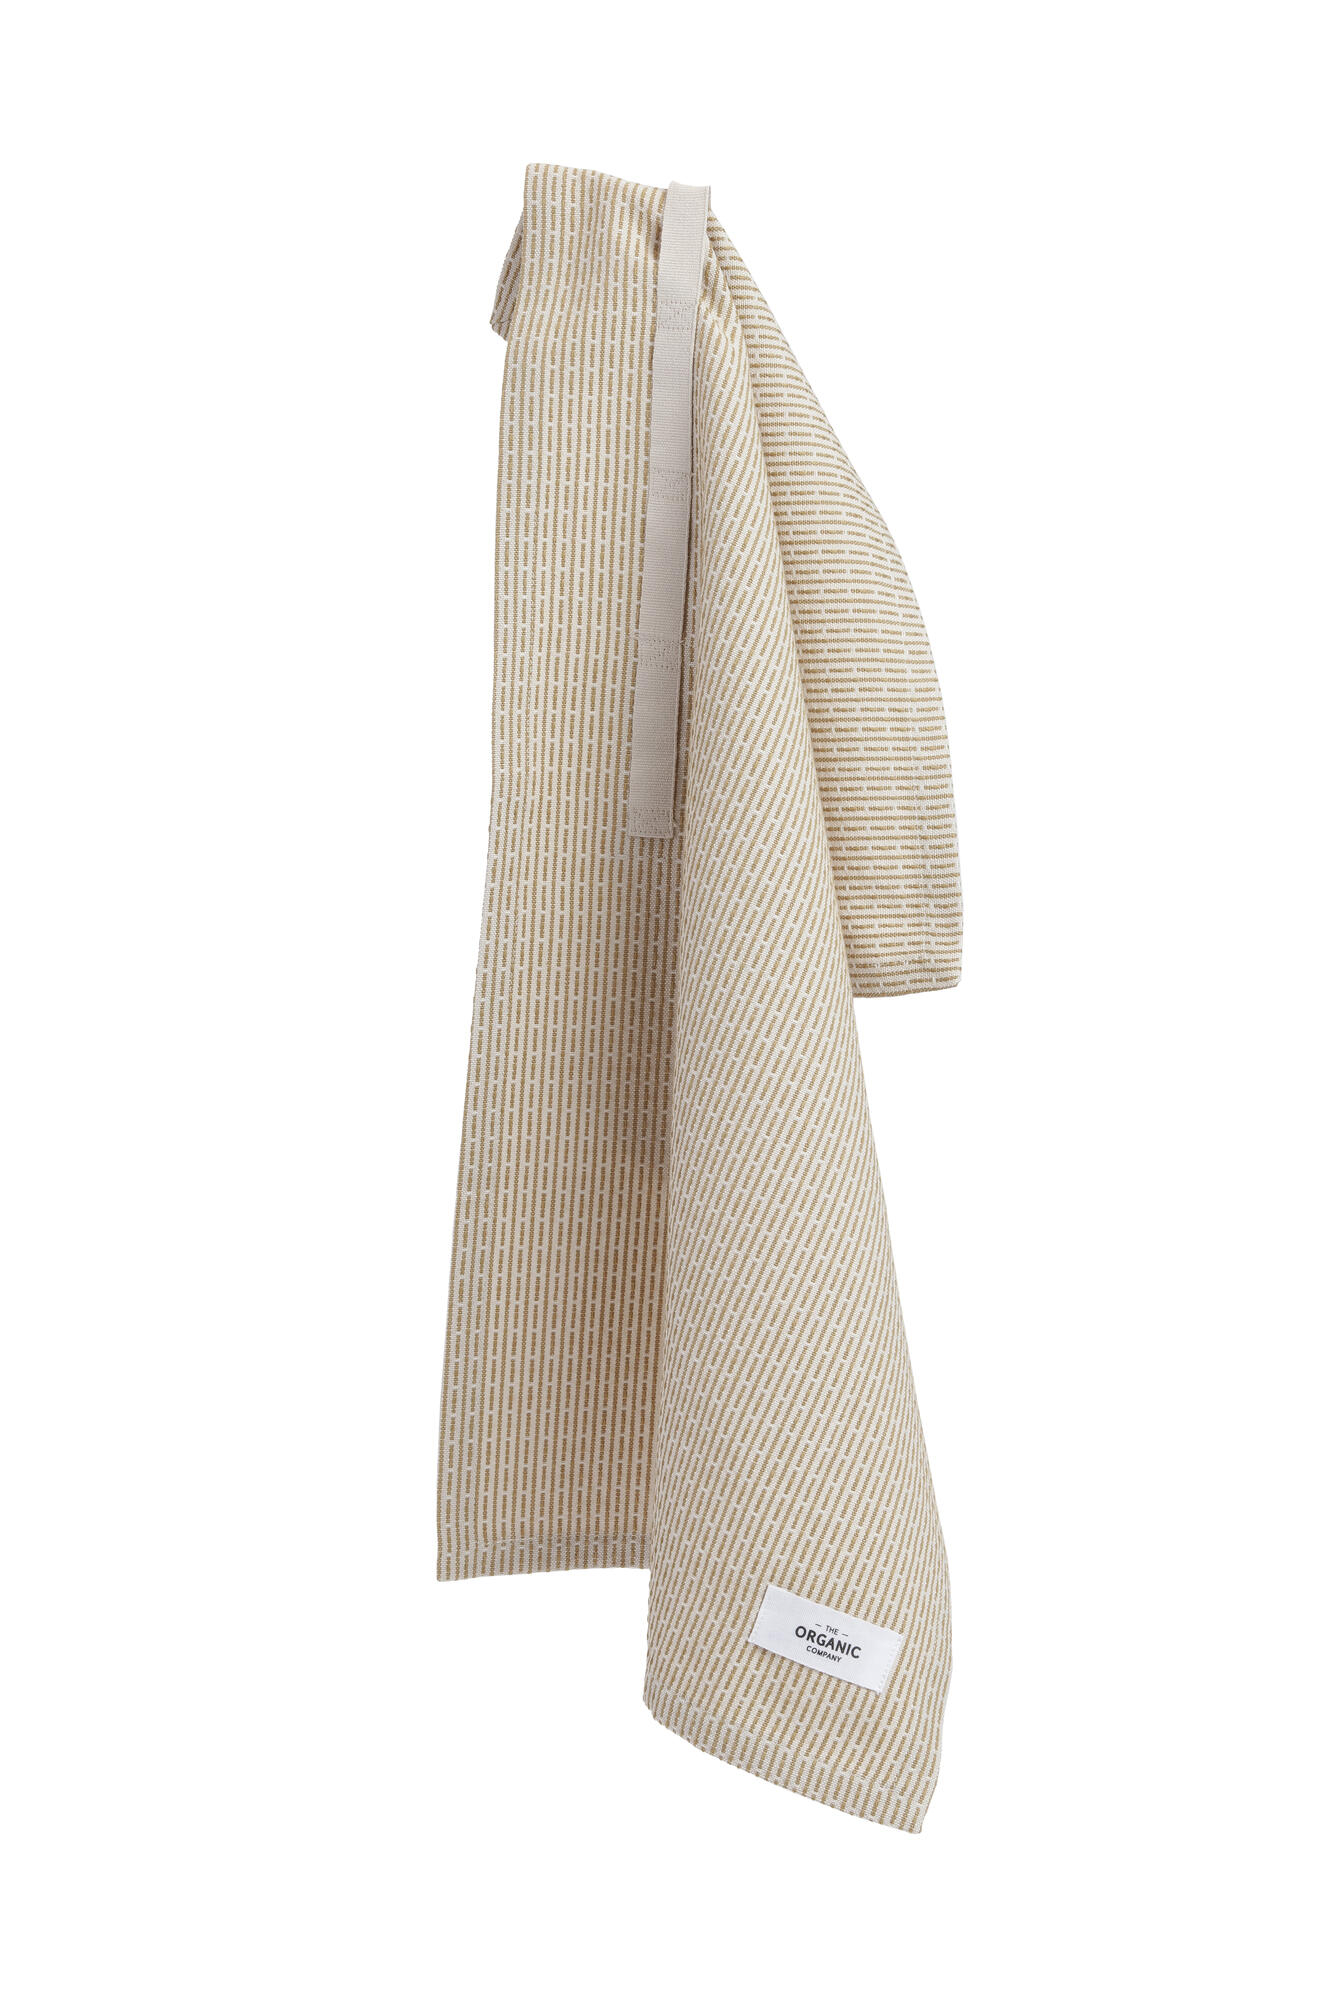 Håndklæde - 214 Lys beige / khaki 35 x 60 cm